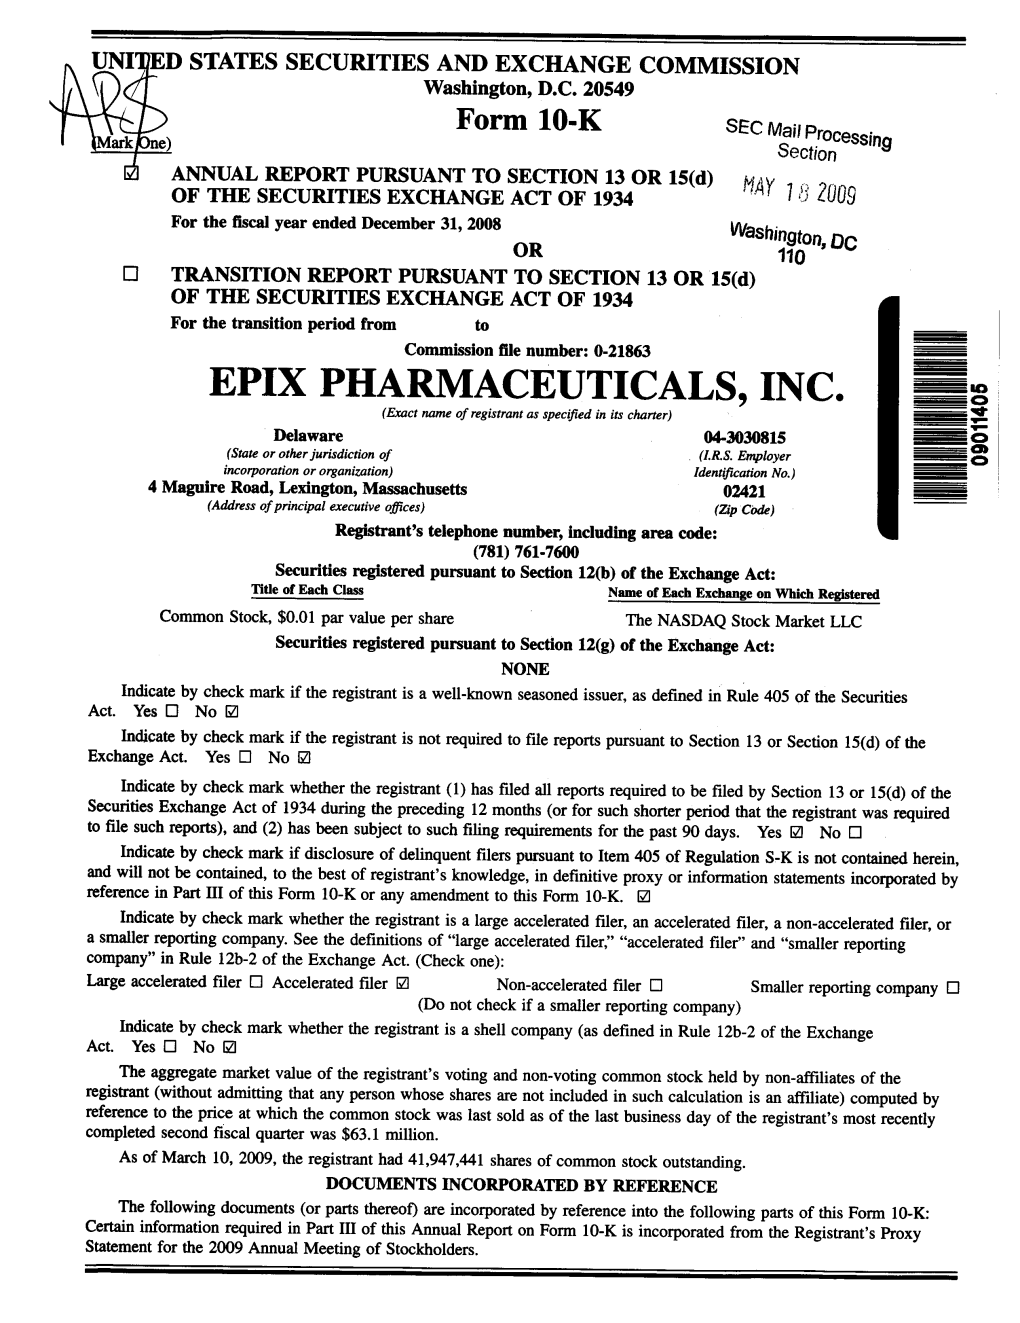 Epix Pharmaceuticalsinc